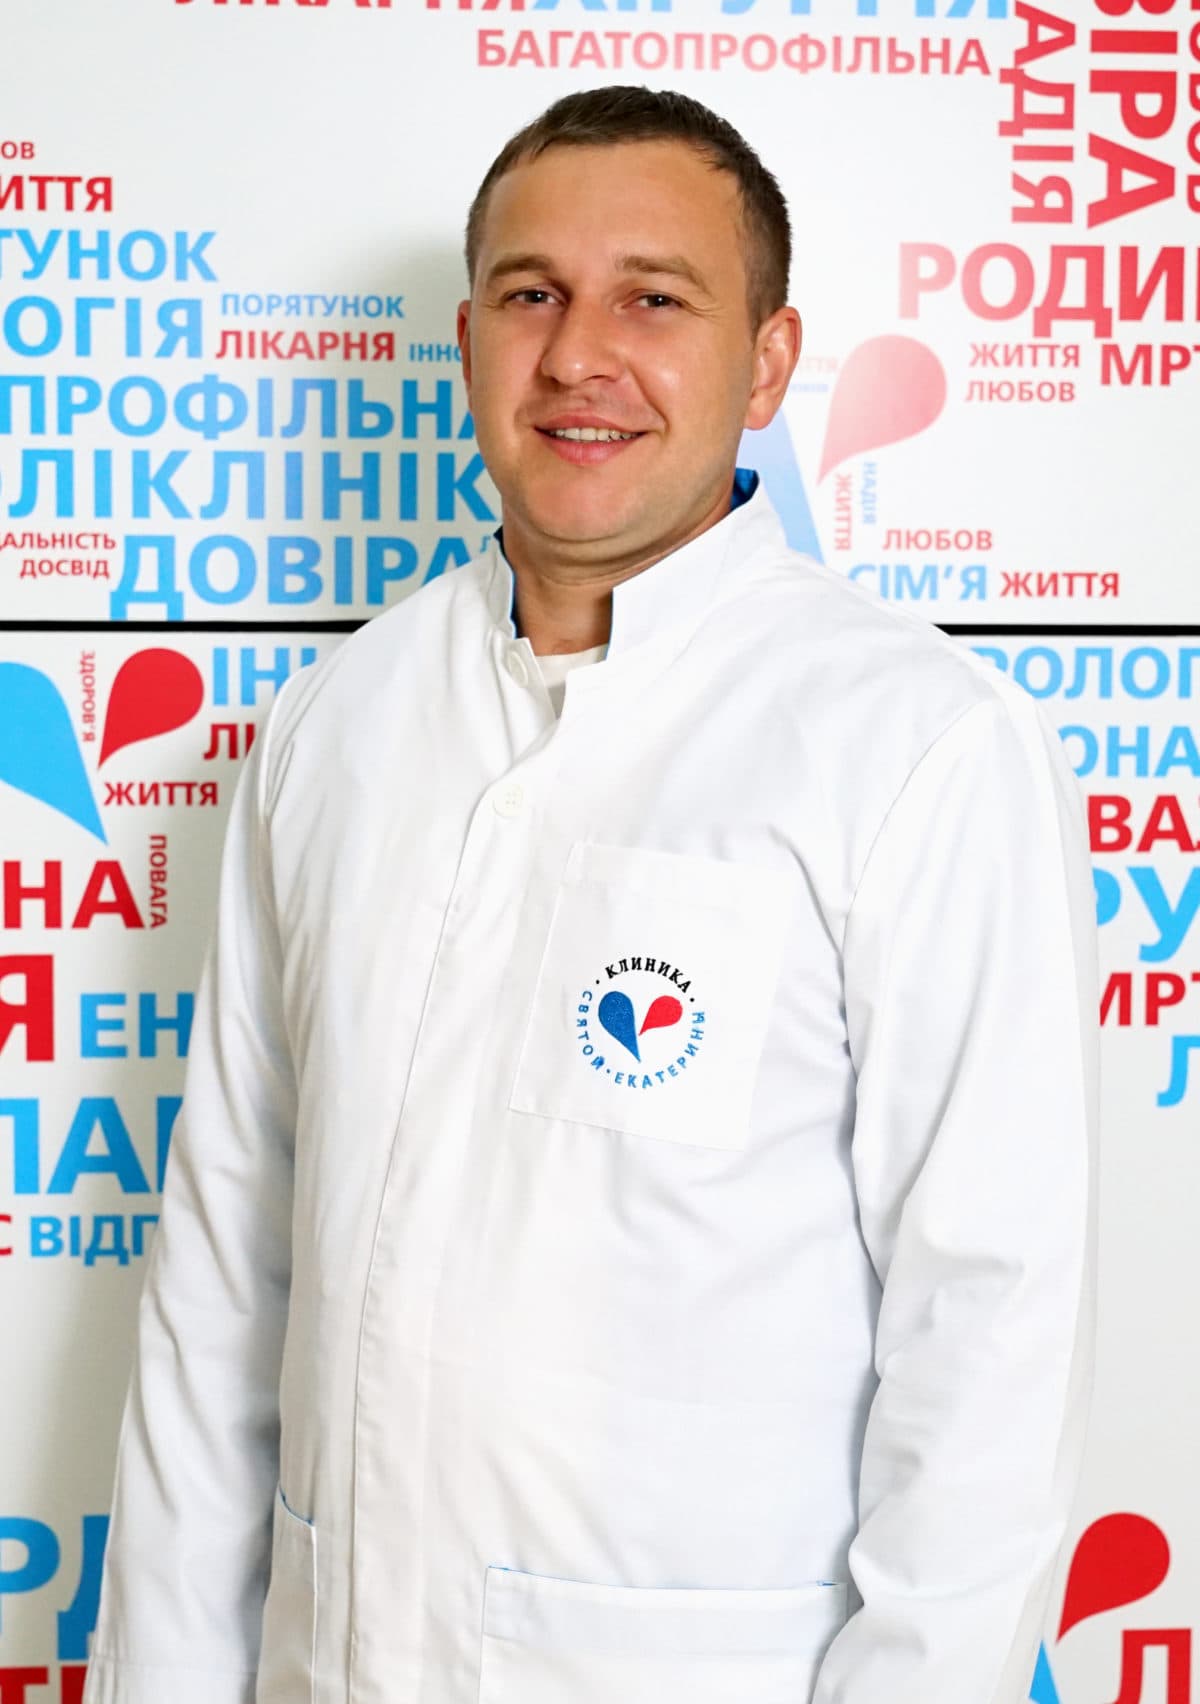 Ткаченко Андрей Григорьевич - 51 - svekaterina.ua